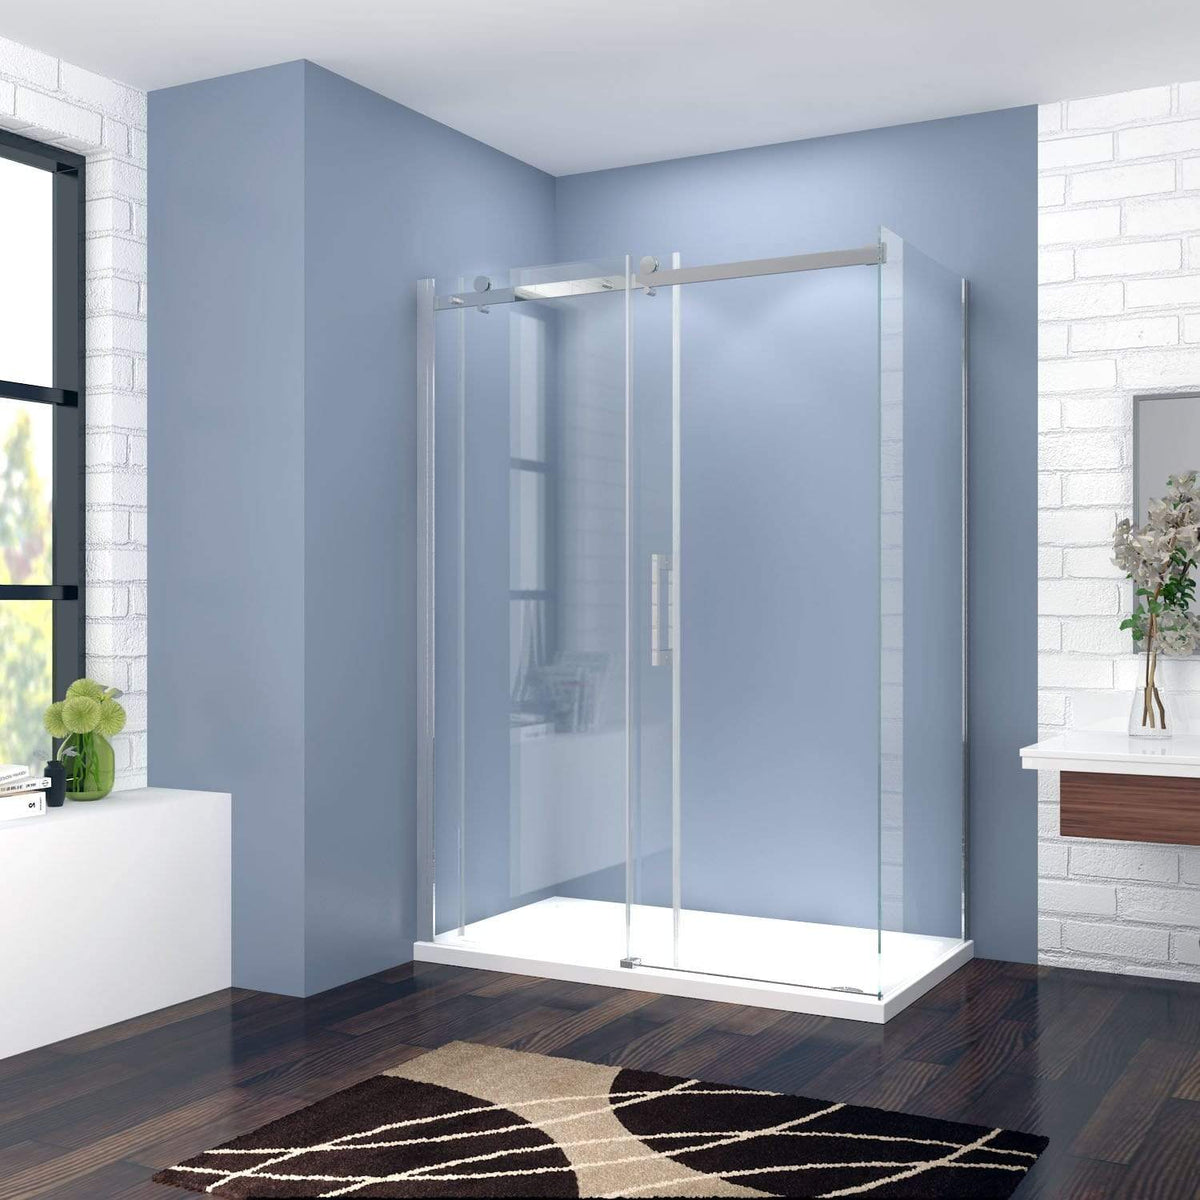 ELEGANT SHOWERS Frameless Sliding Shower Screens Luxury Bathroom - Elegantshowers